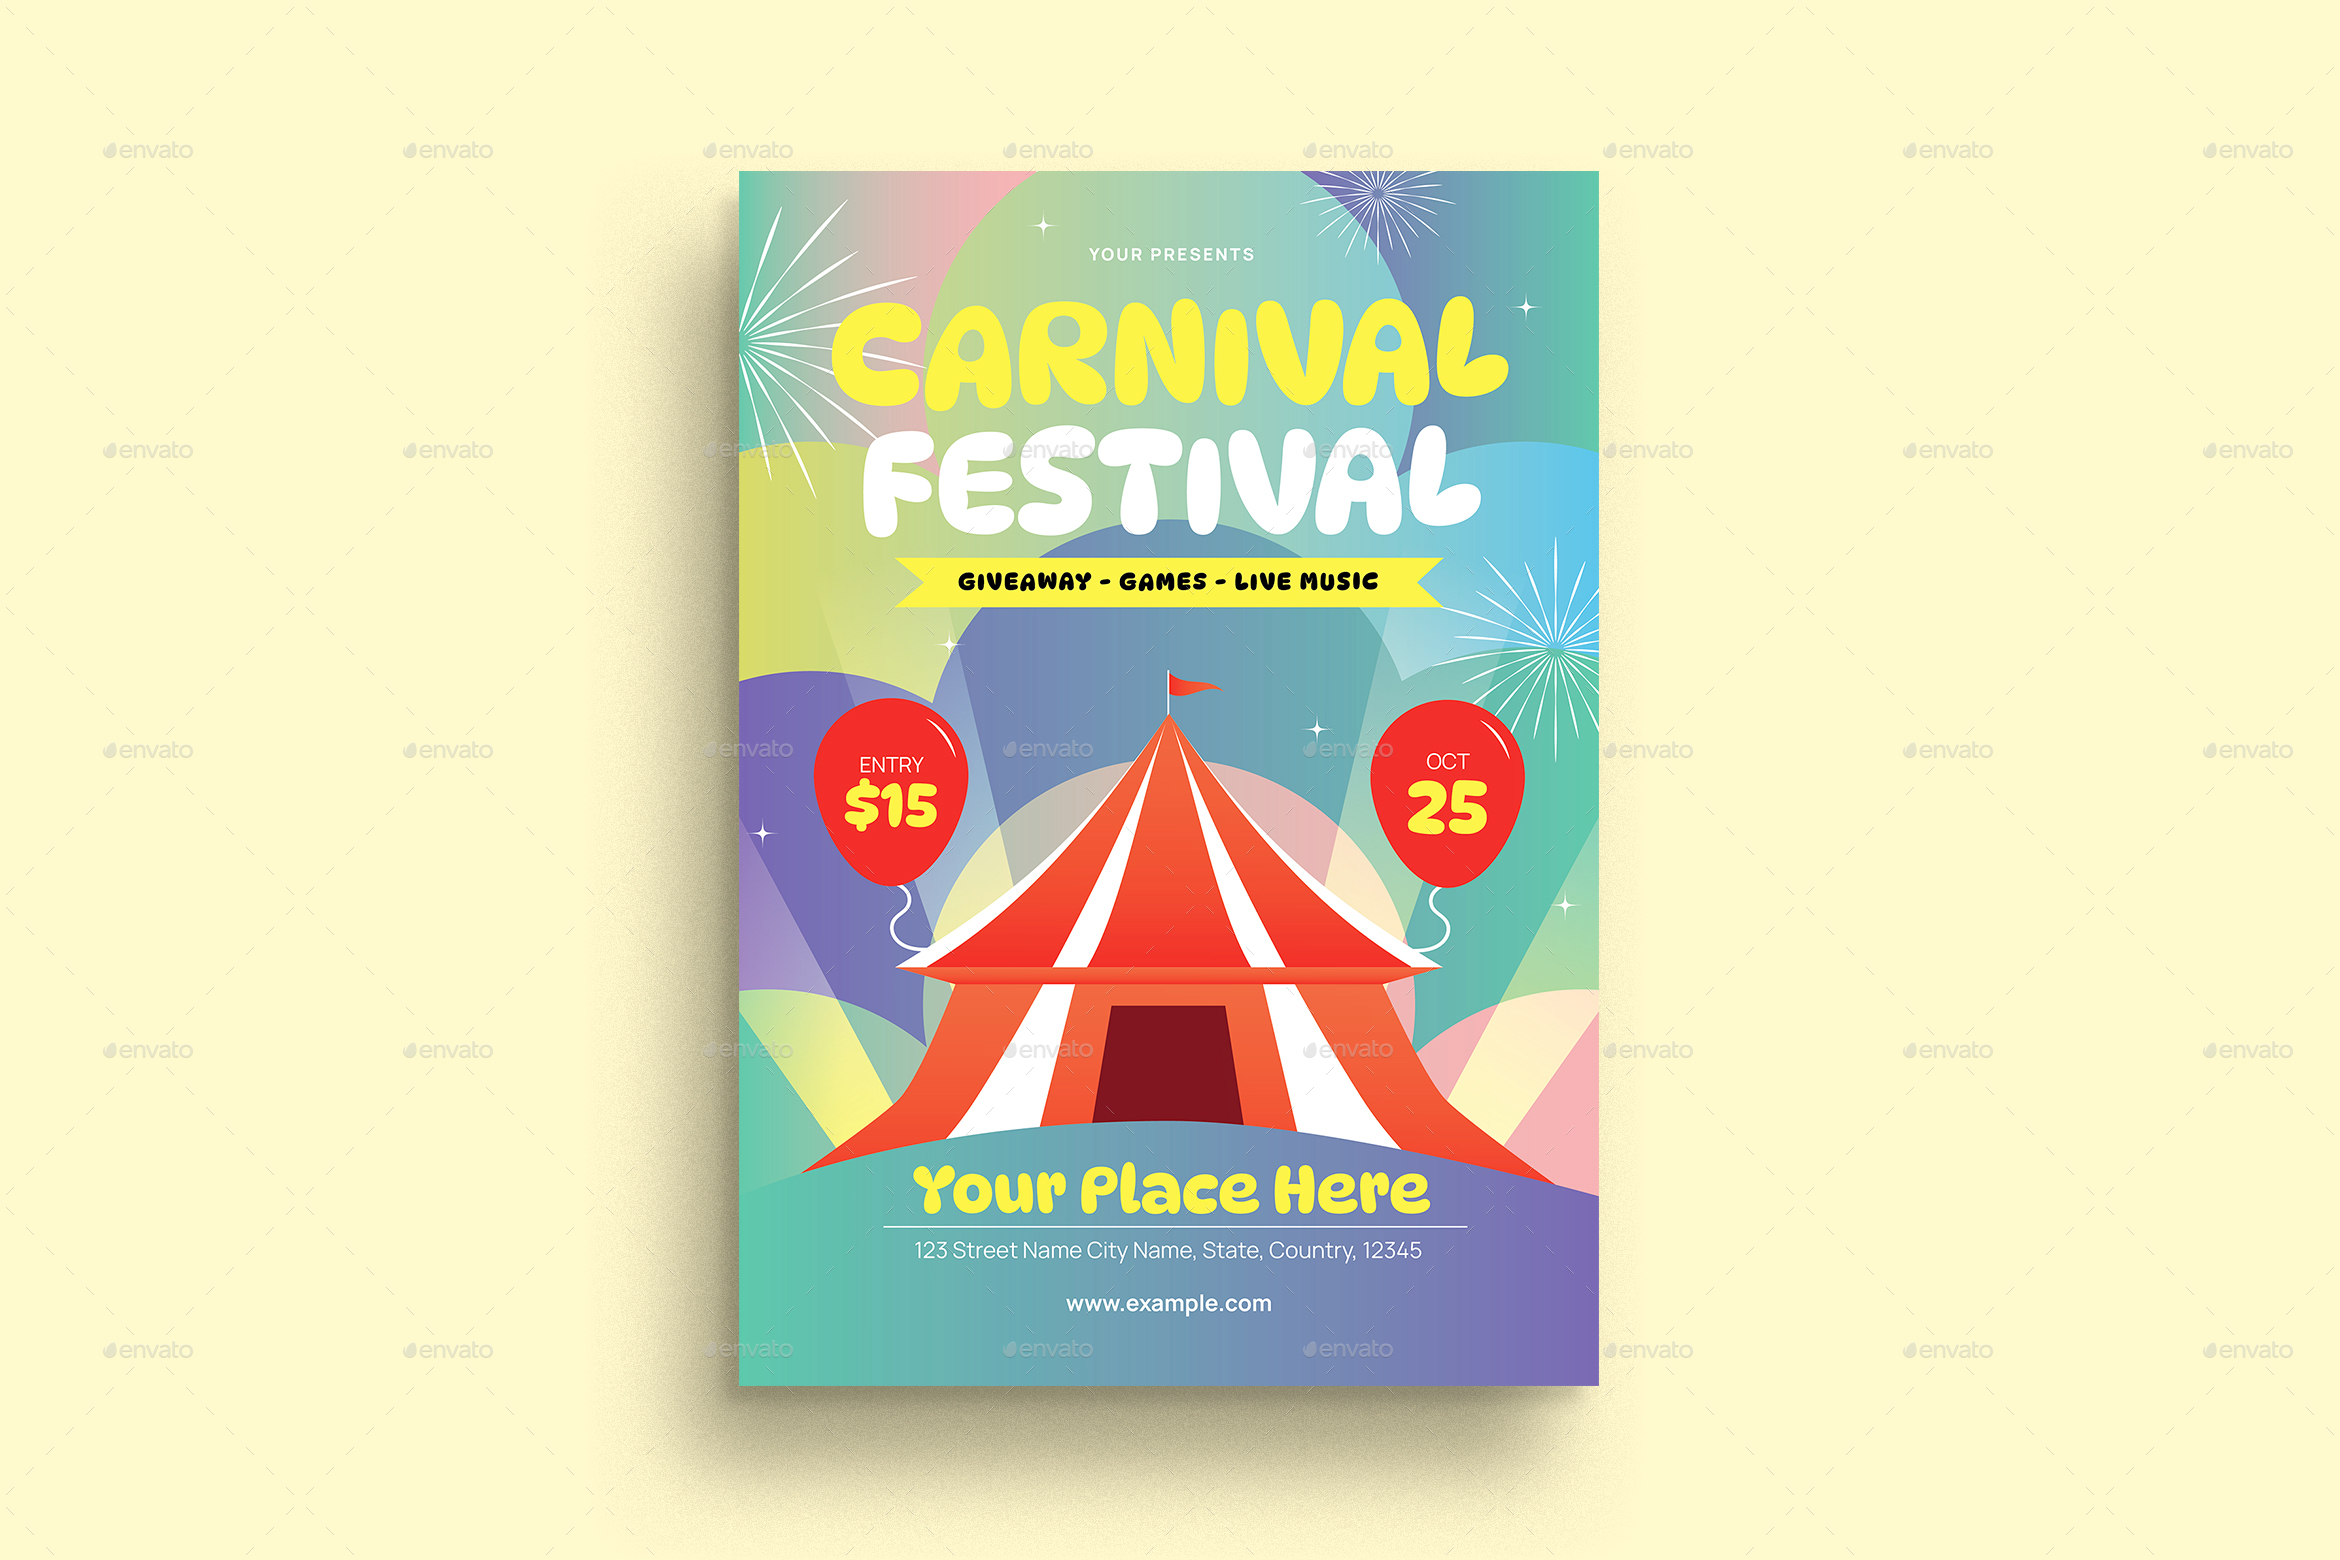 school carnival poster ideas